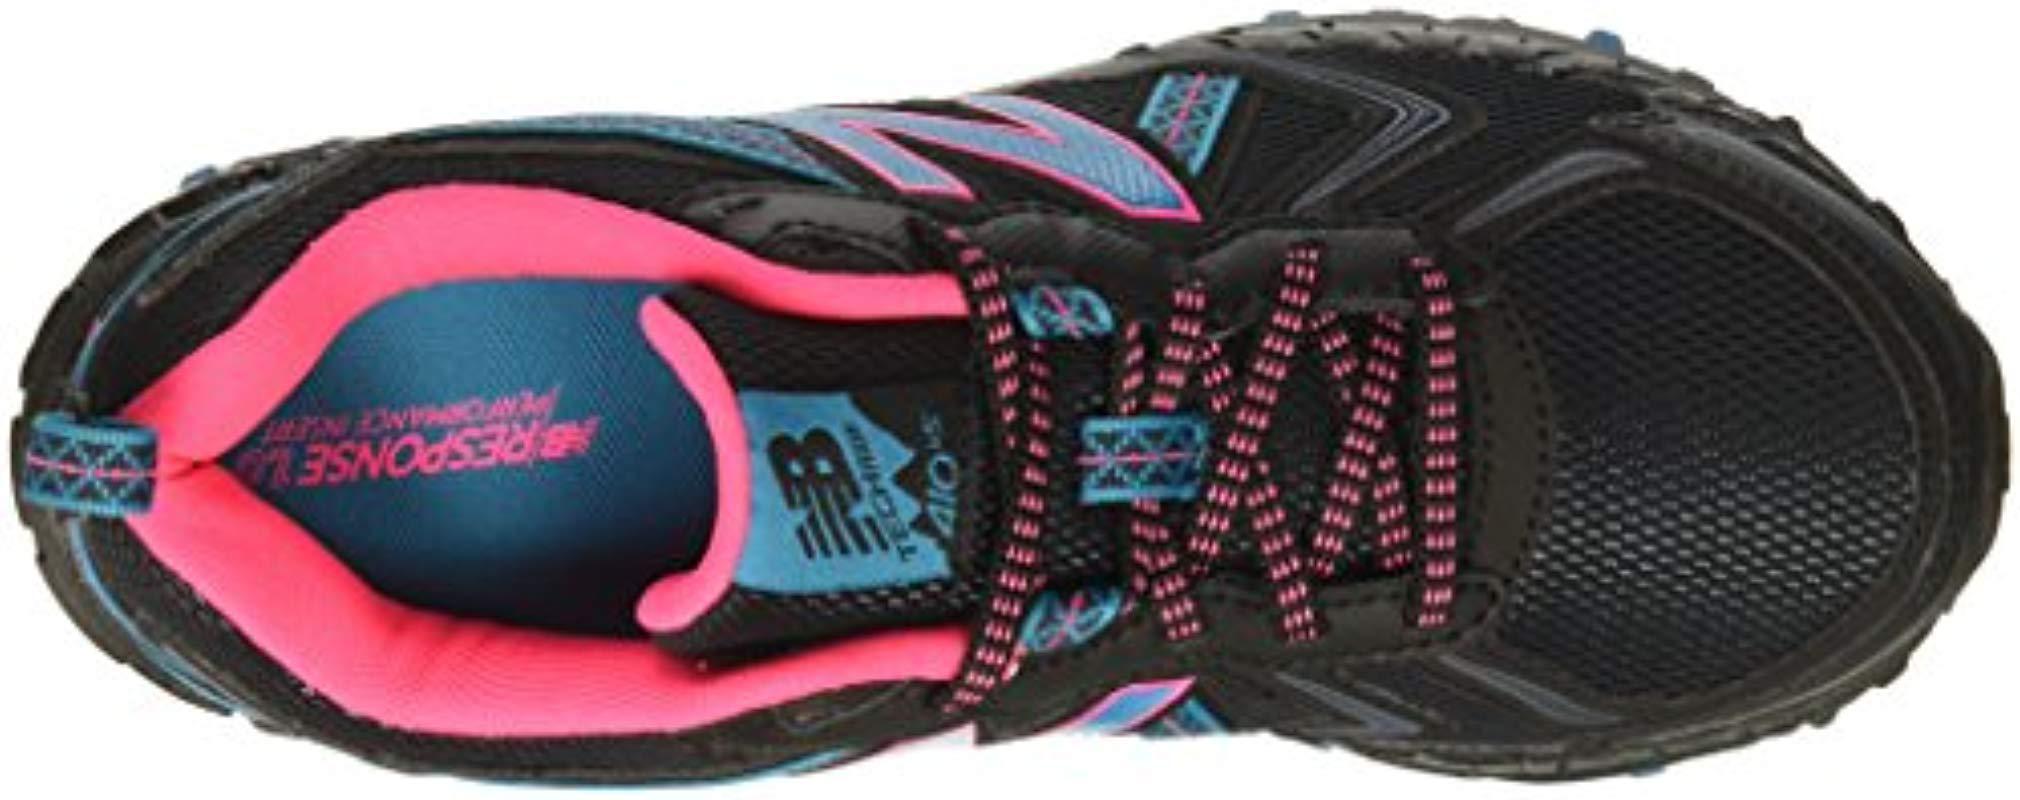 women's wt410v5 cushioning trail running shoe